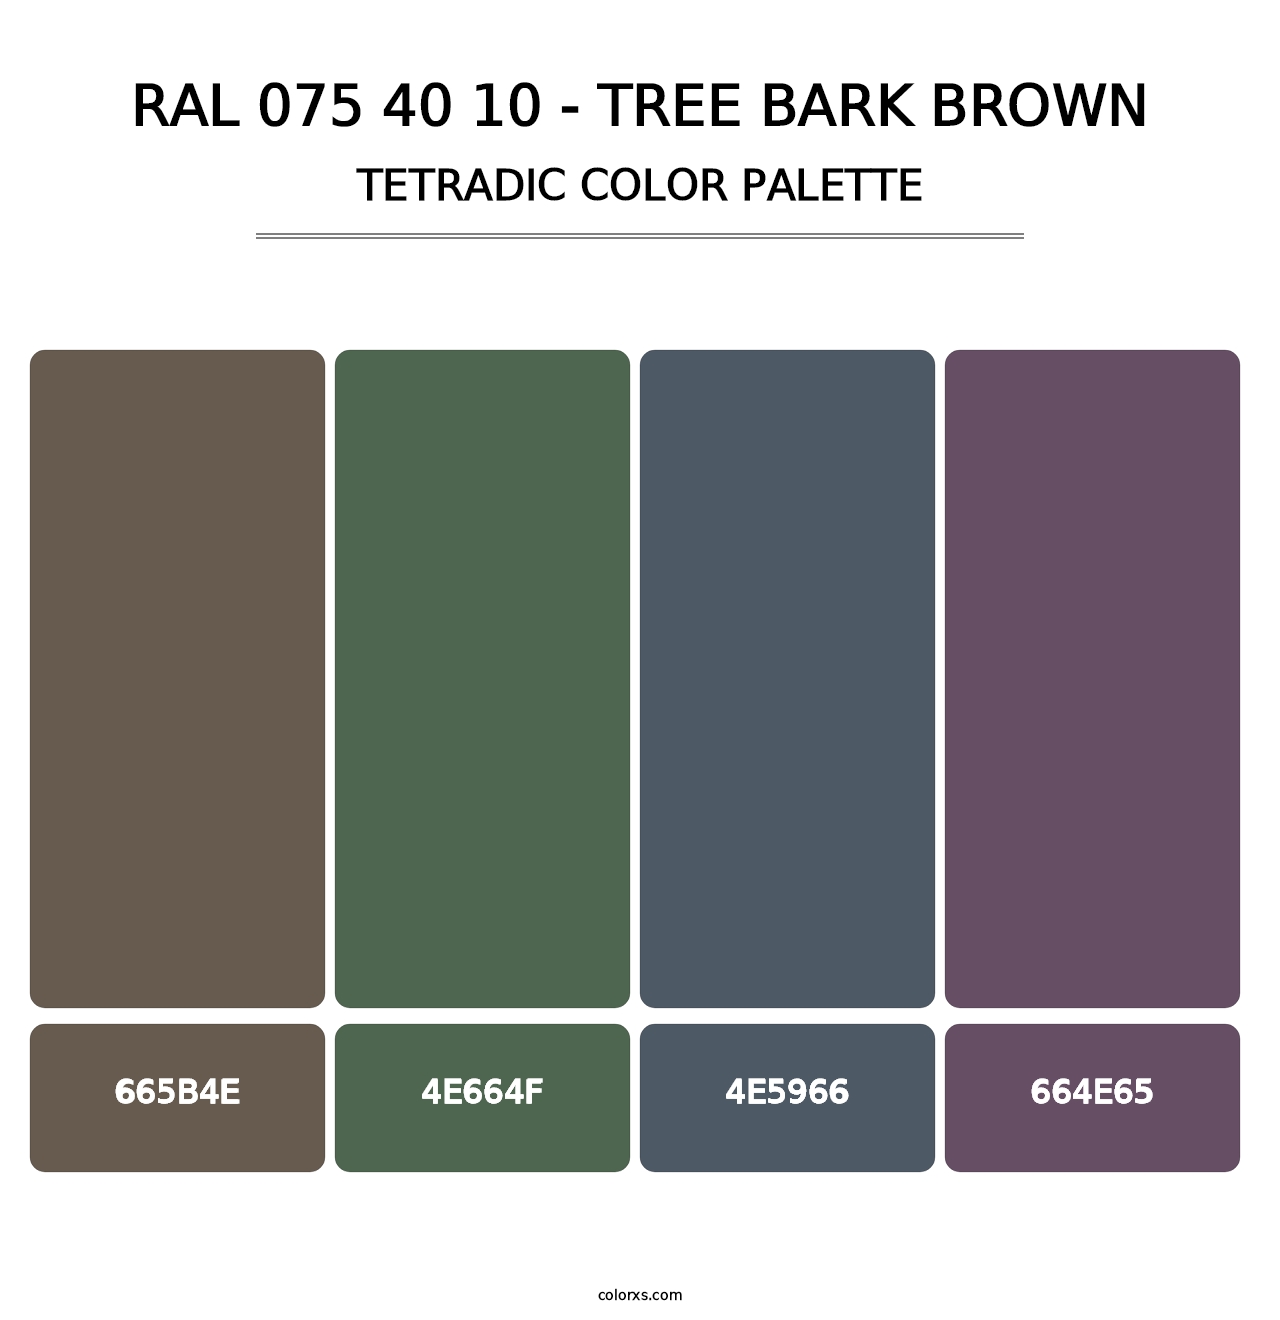 RAL 075 40 10 - Tree Bark Brown - Tetradic Color Palette